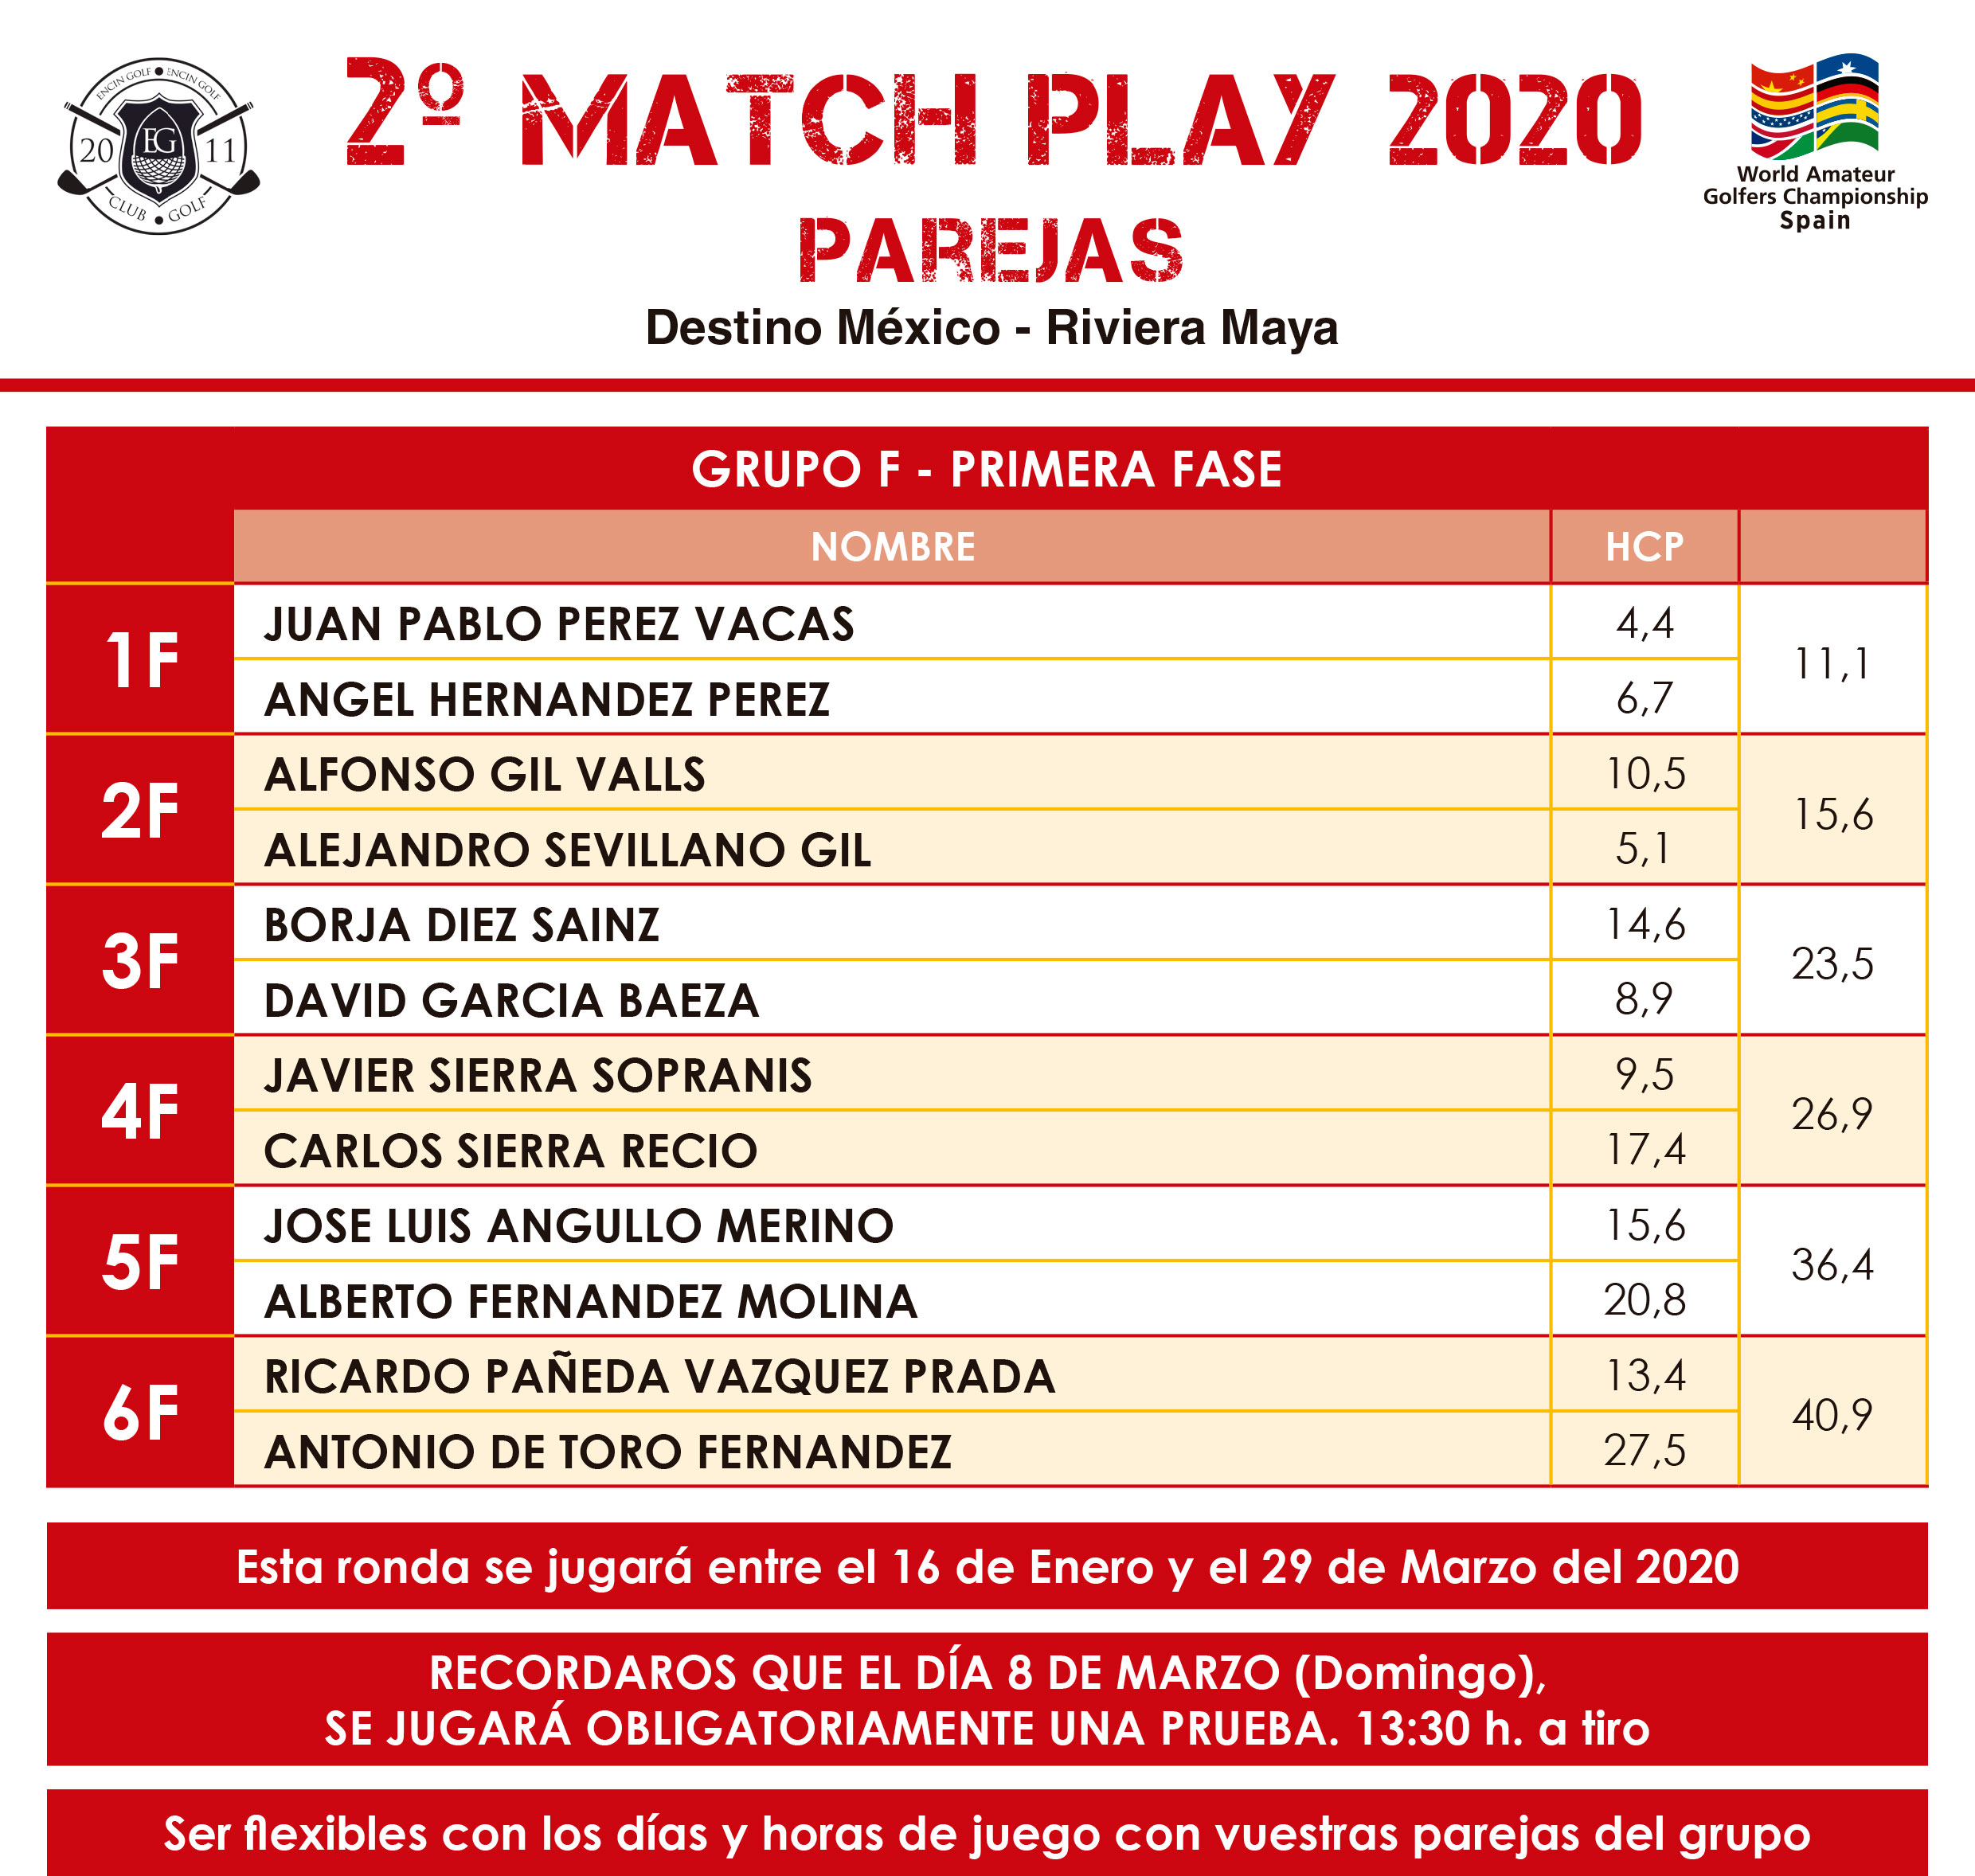 WAGC SPAIN - MATCH PLAY 2020 PAREJAS - 1ª FASE - GRUPO F